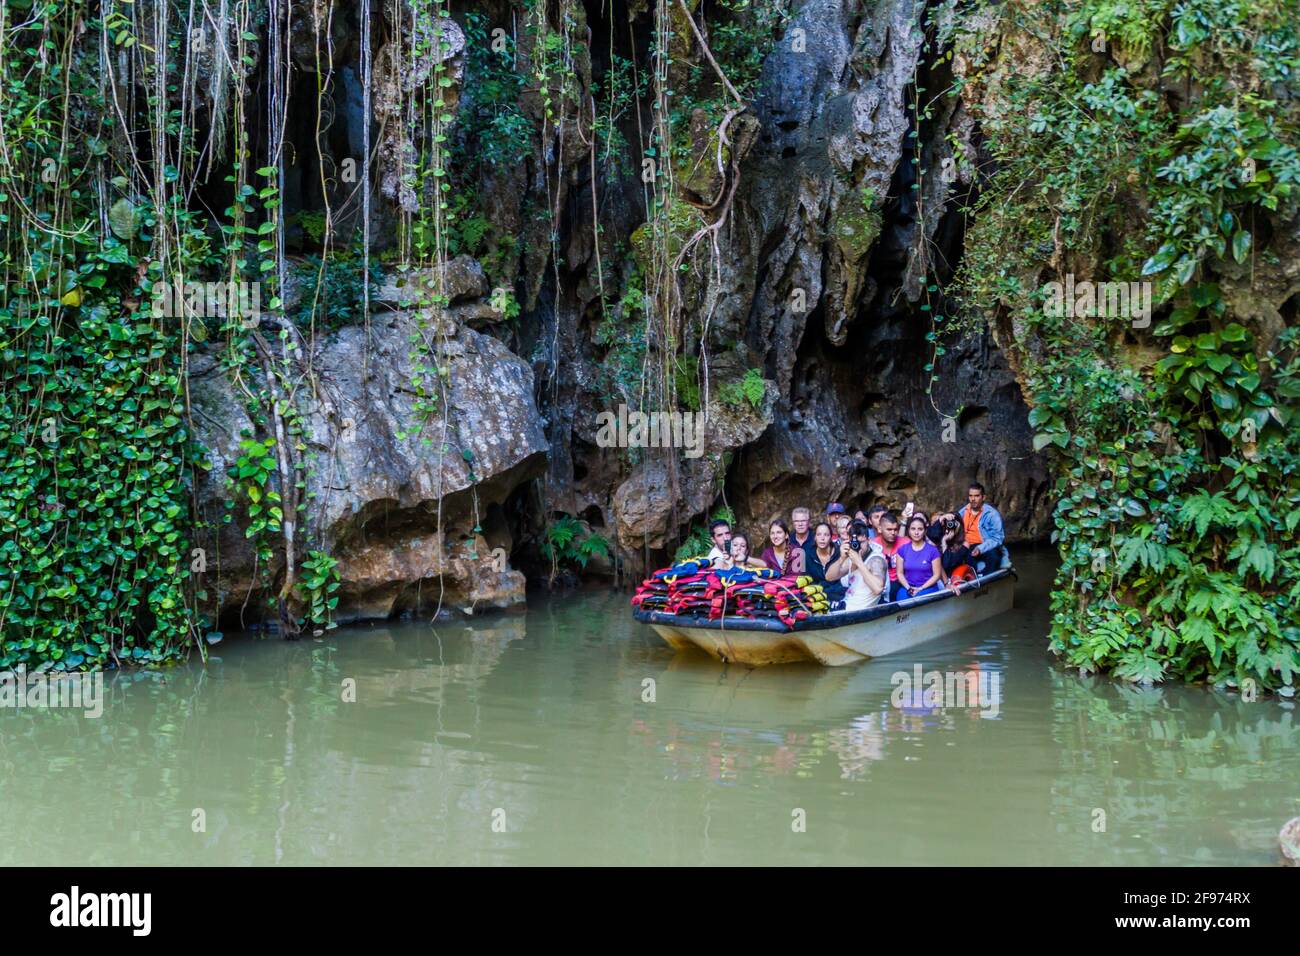 VINALES, CUBA - FEB 18, 2016: Tourists in a boat are leaving Cueva del Indio cave in National Park Vinales, Cuba Stock Photo